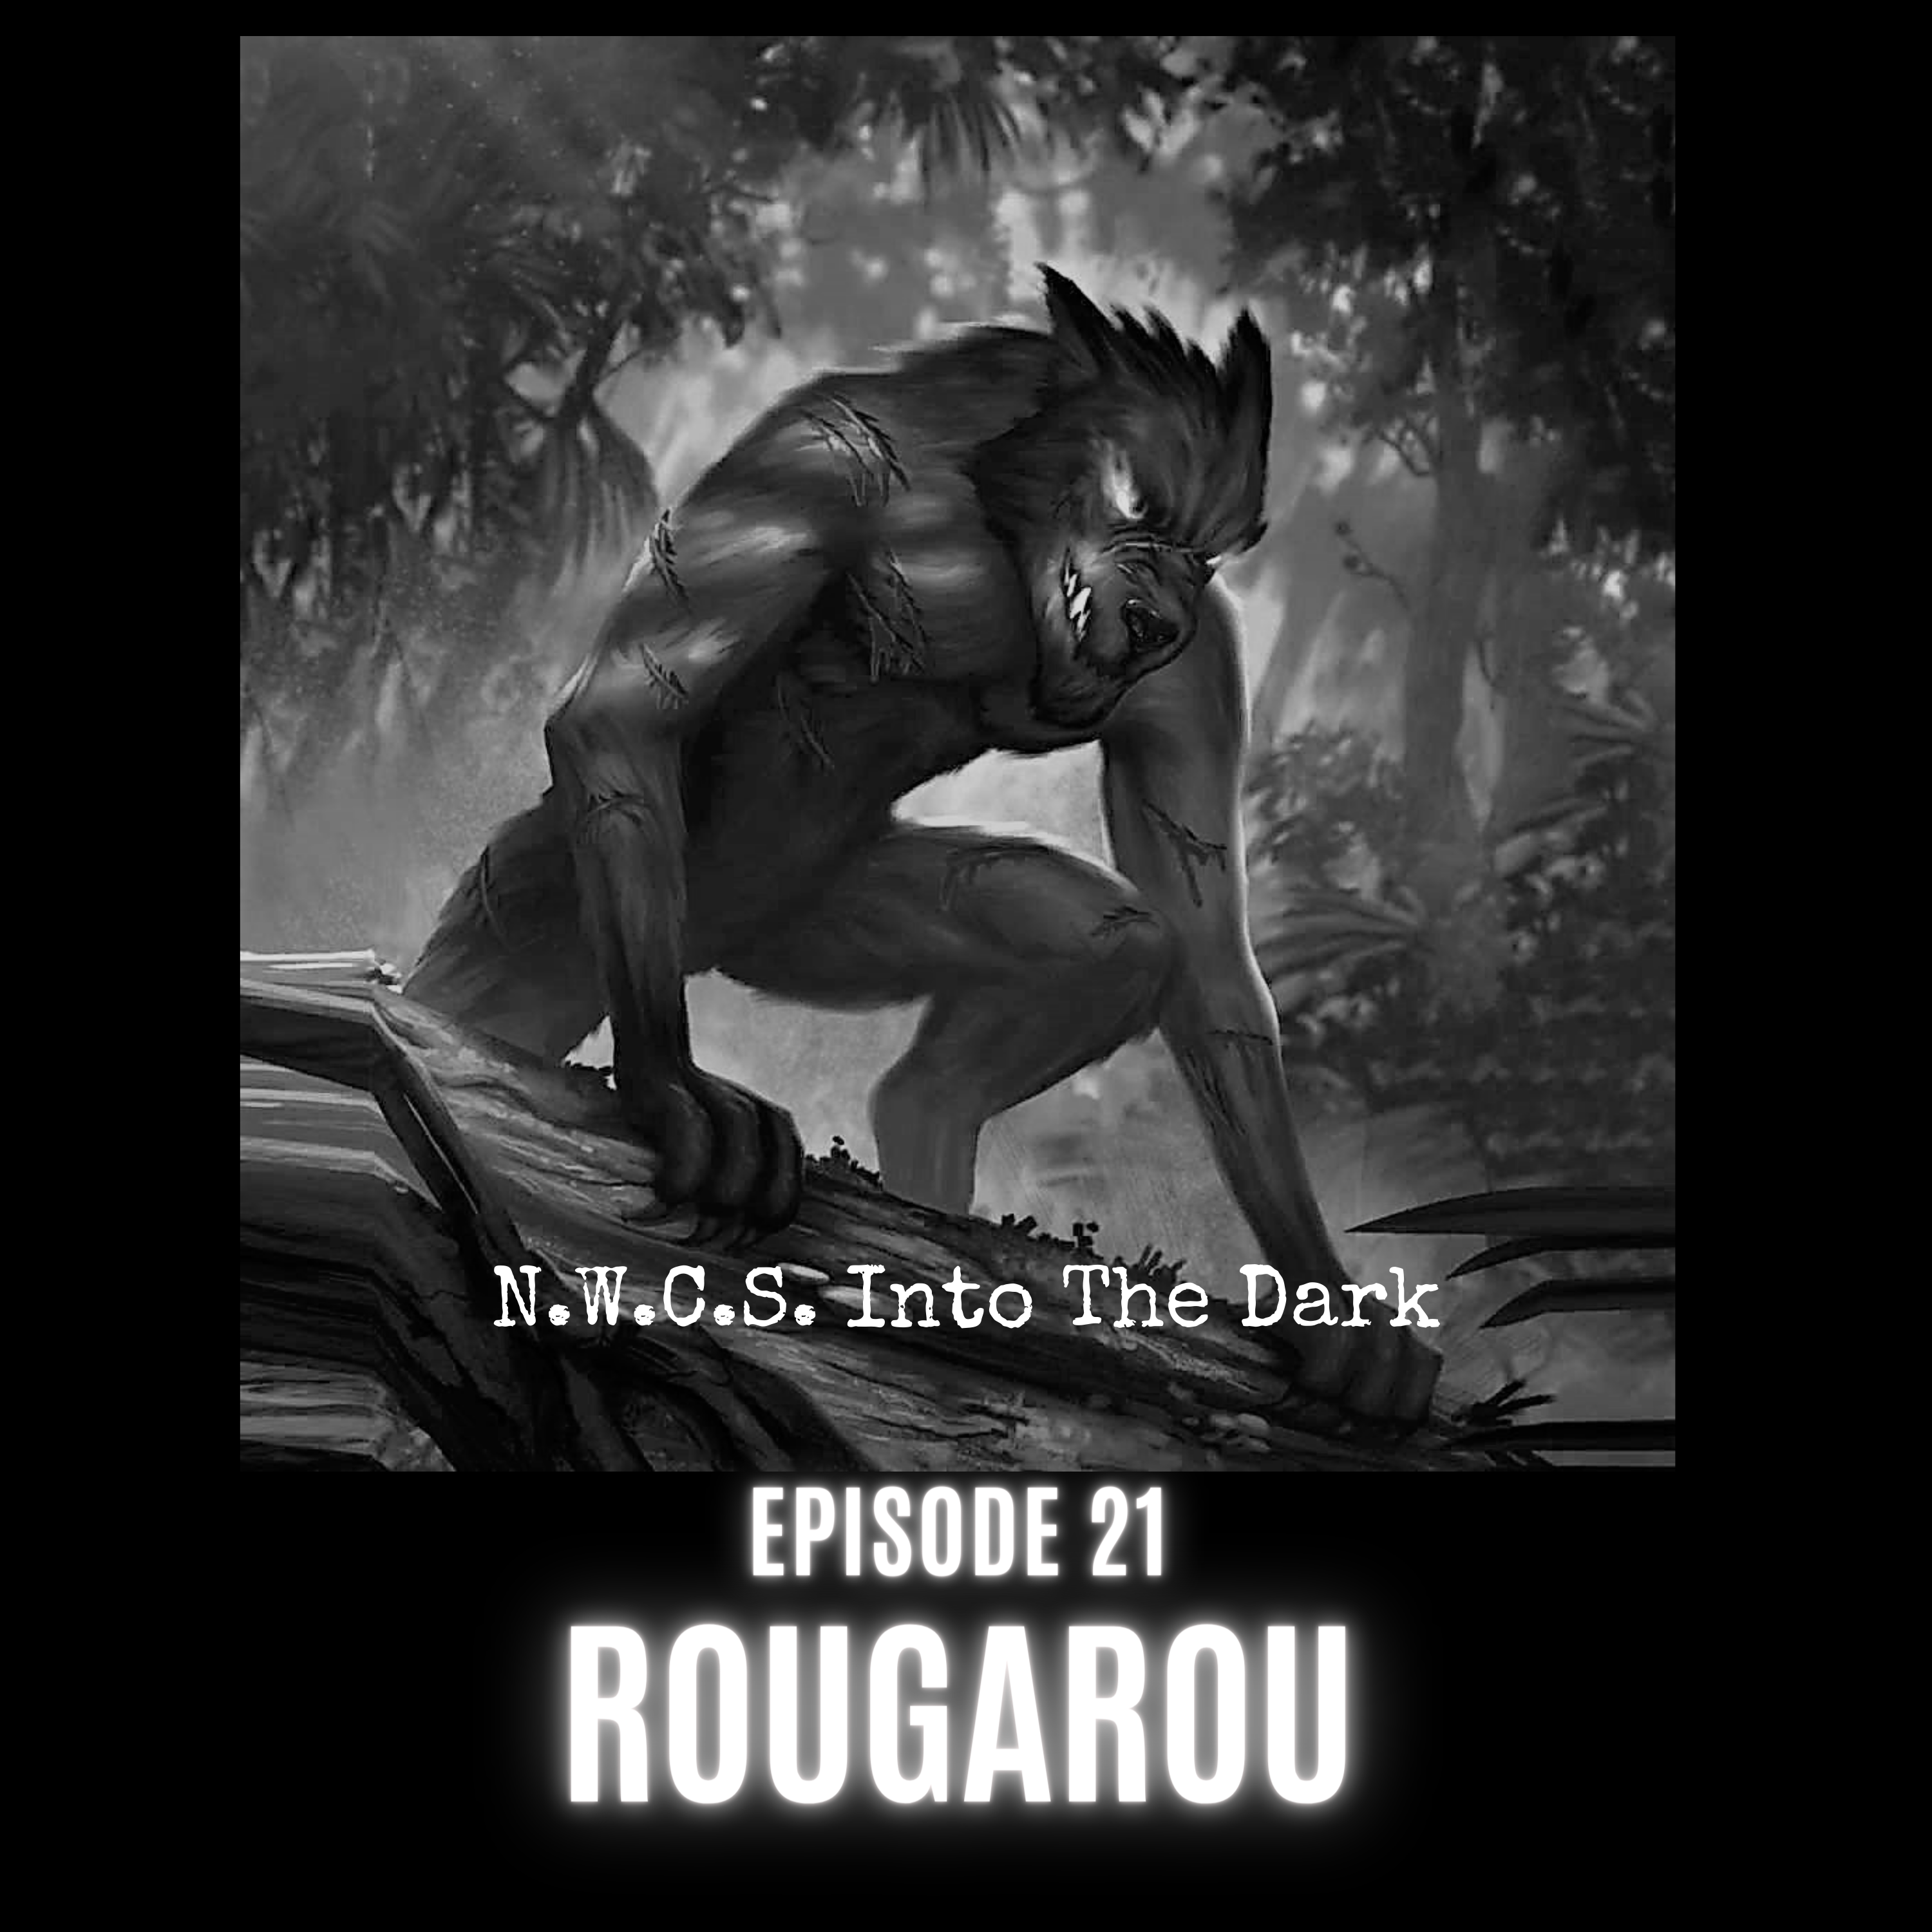 N.W.C.S. - Into The Dark Episode 21 - Rougarou